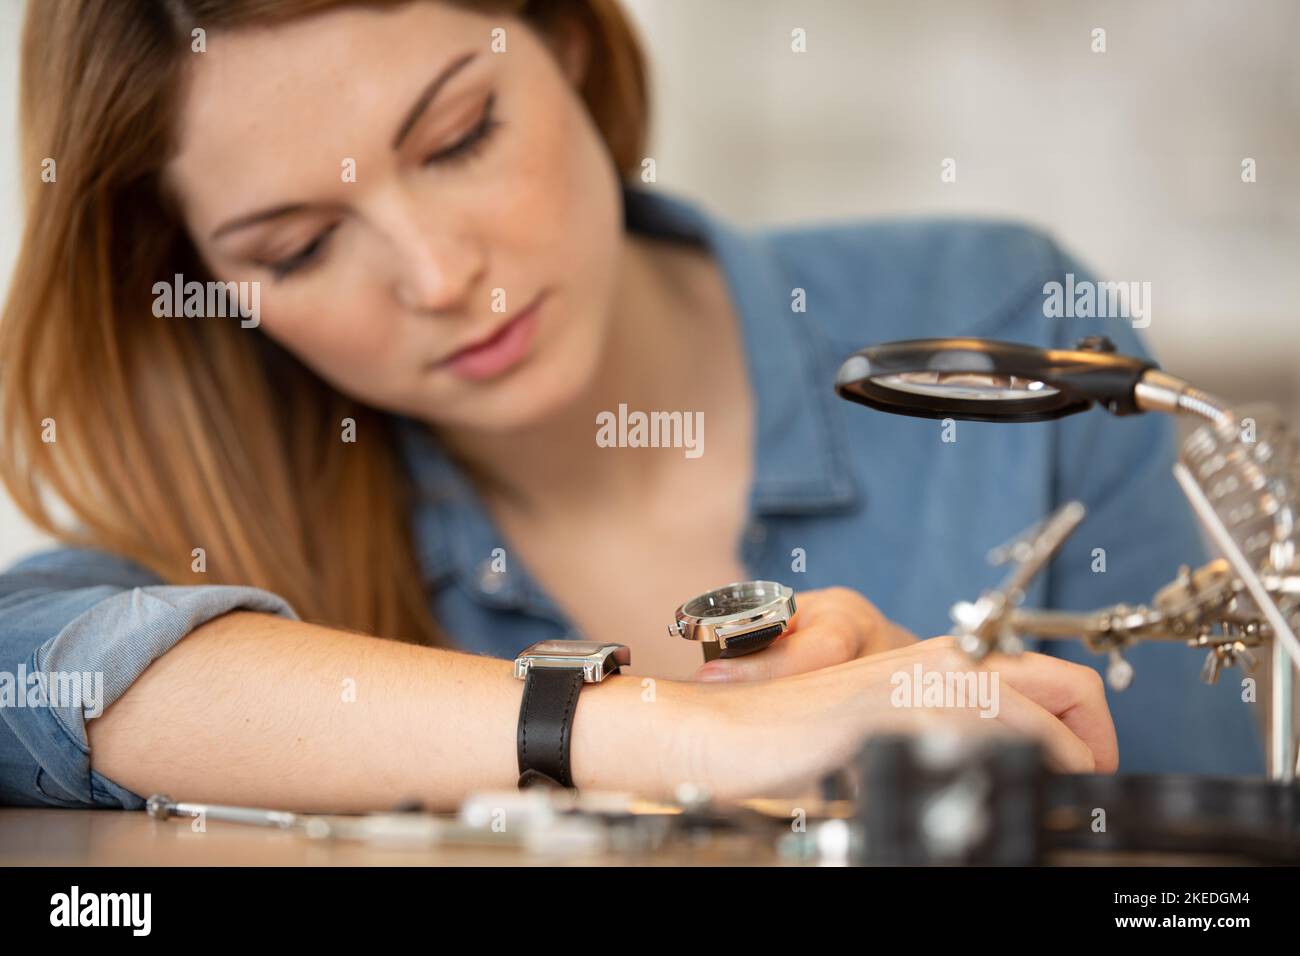 happy woman repairing a clocks Stock Photo